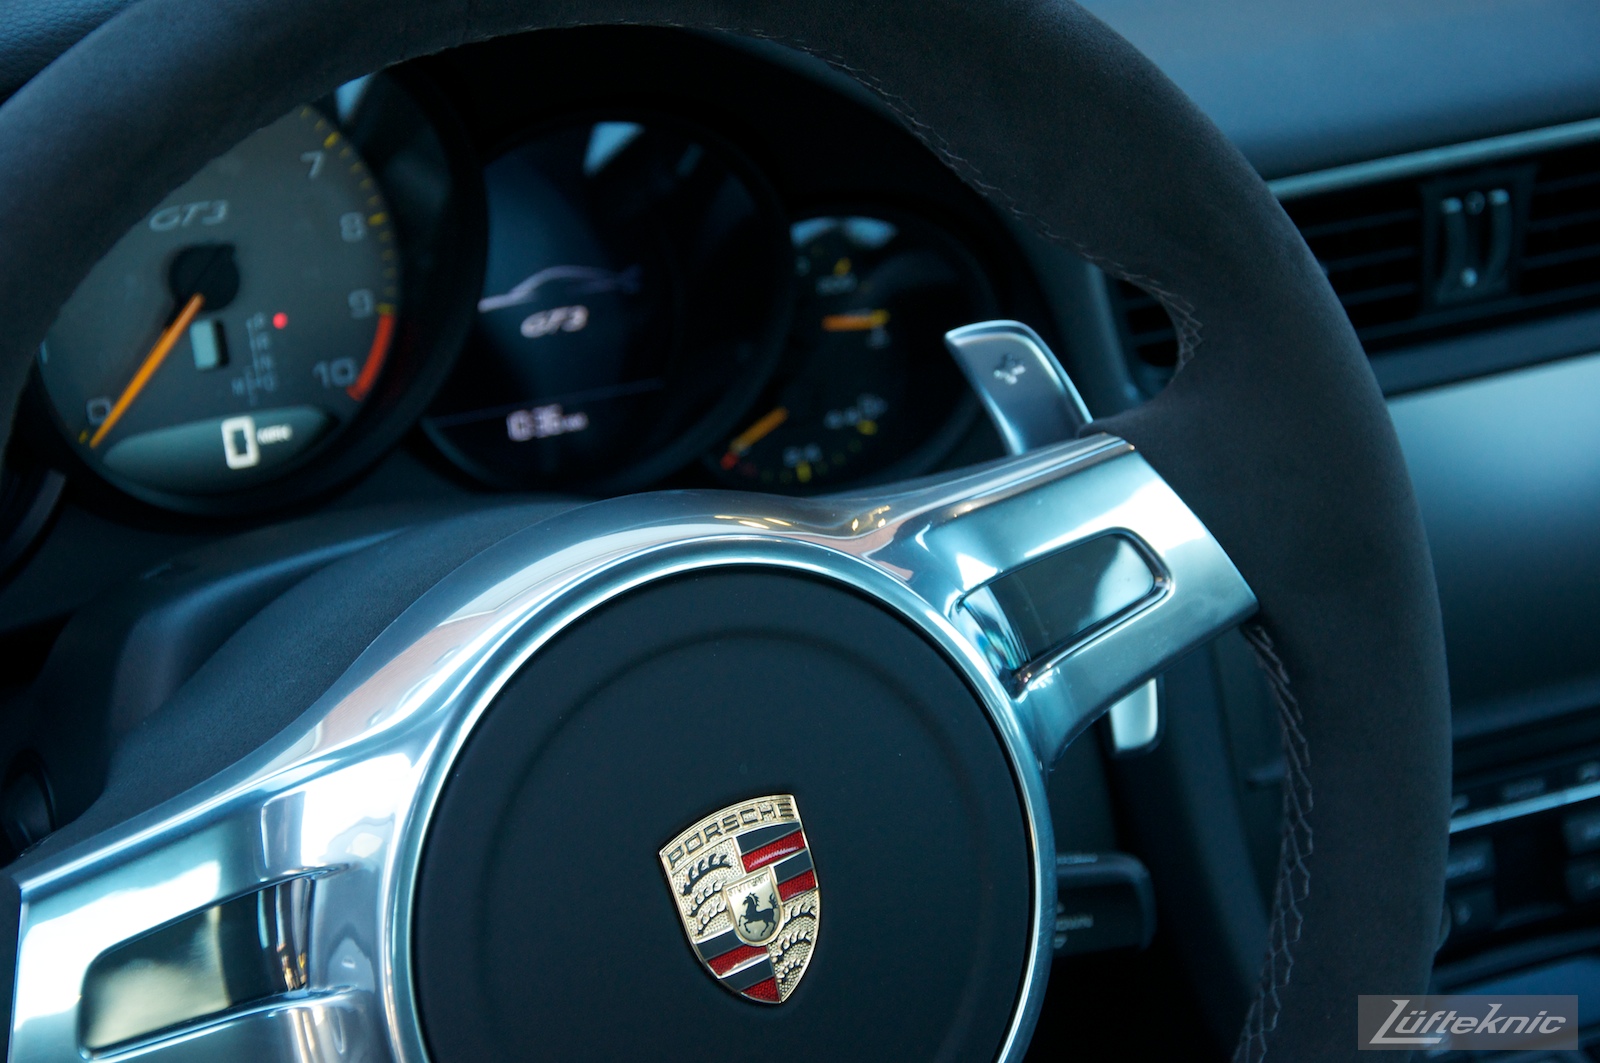 Lüfteknic Porsche 991 GT3 steering wheel and PDK shifter levers